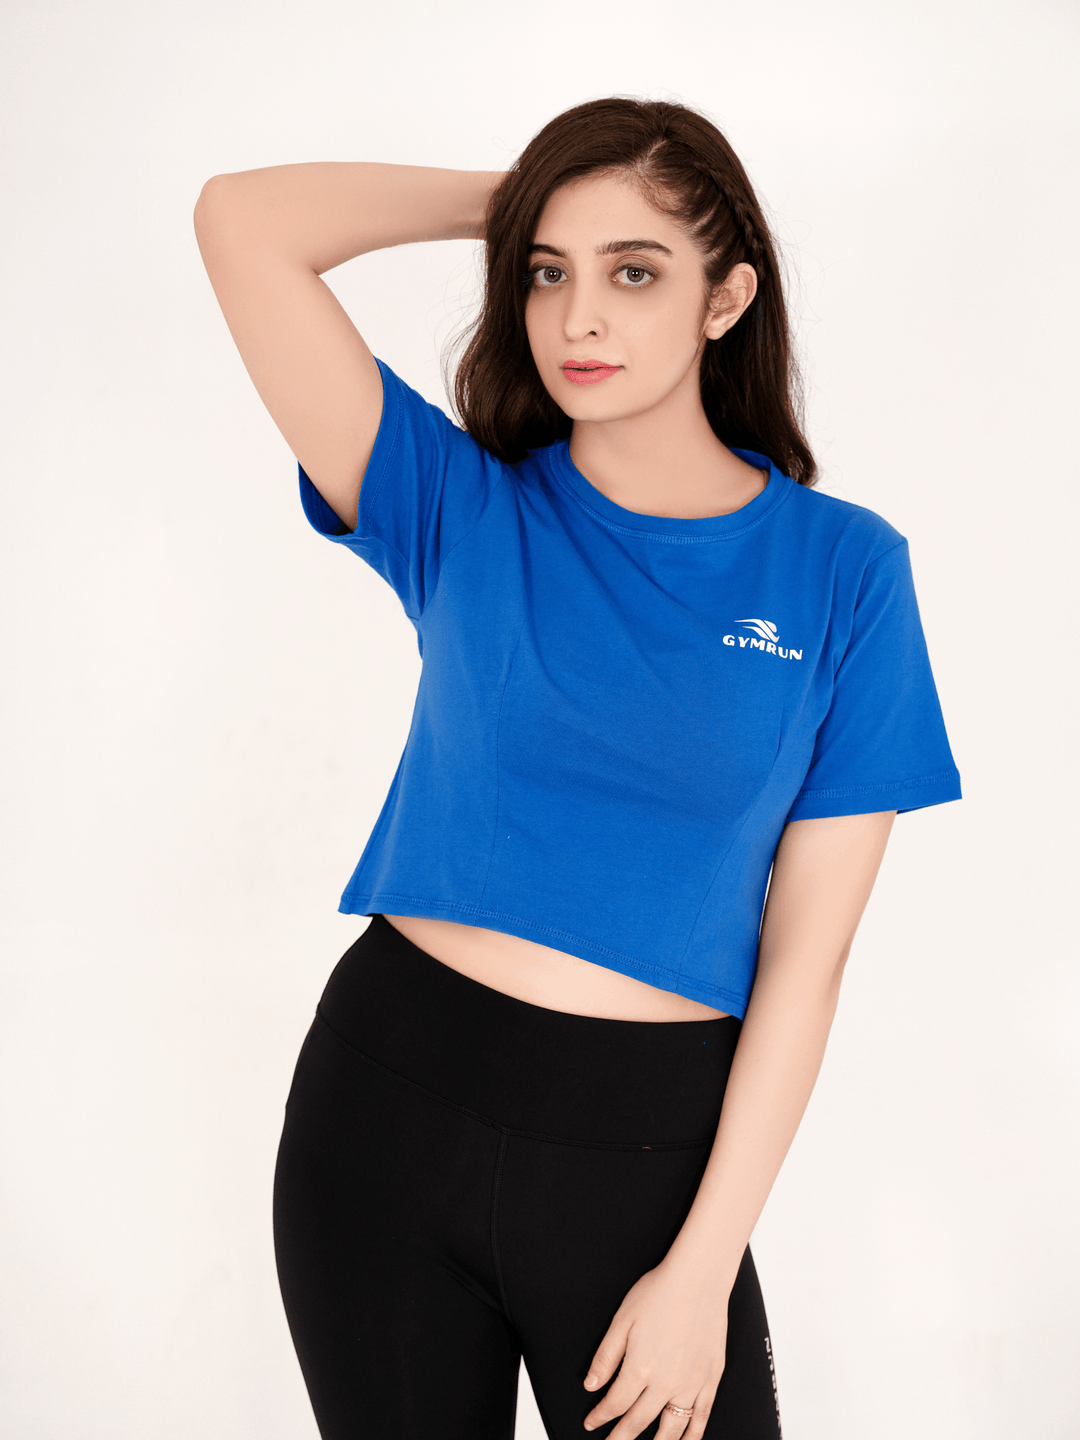 Oversized Crop T-Shirt - Royal Blue - GYMRUN Activewear